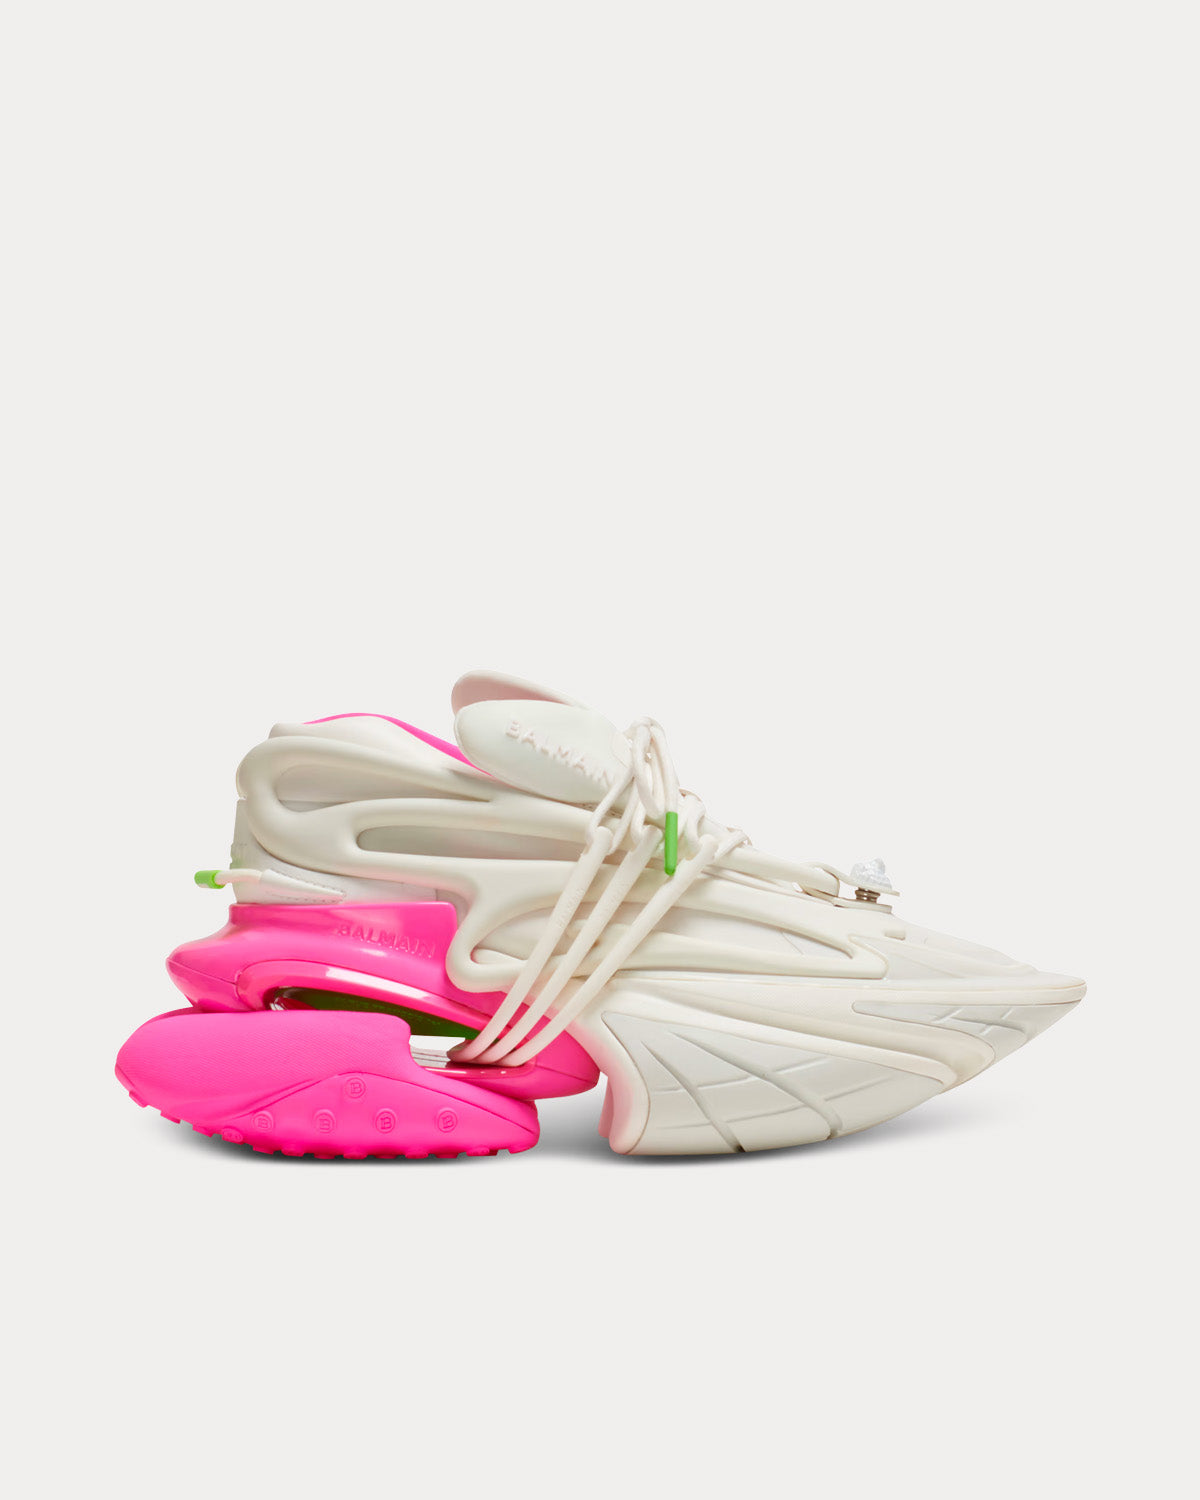 Balmain - Unicorn Neoprene & Leather Pink / White Low Top Sneakers